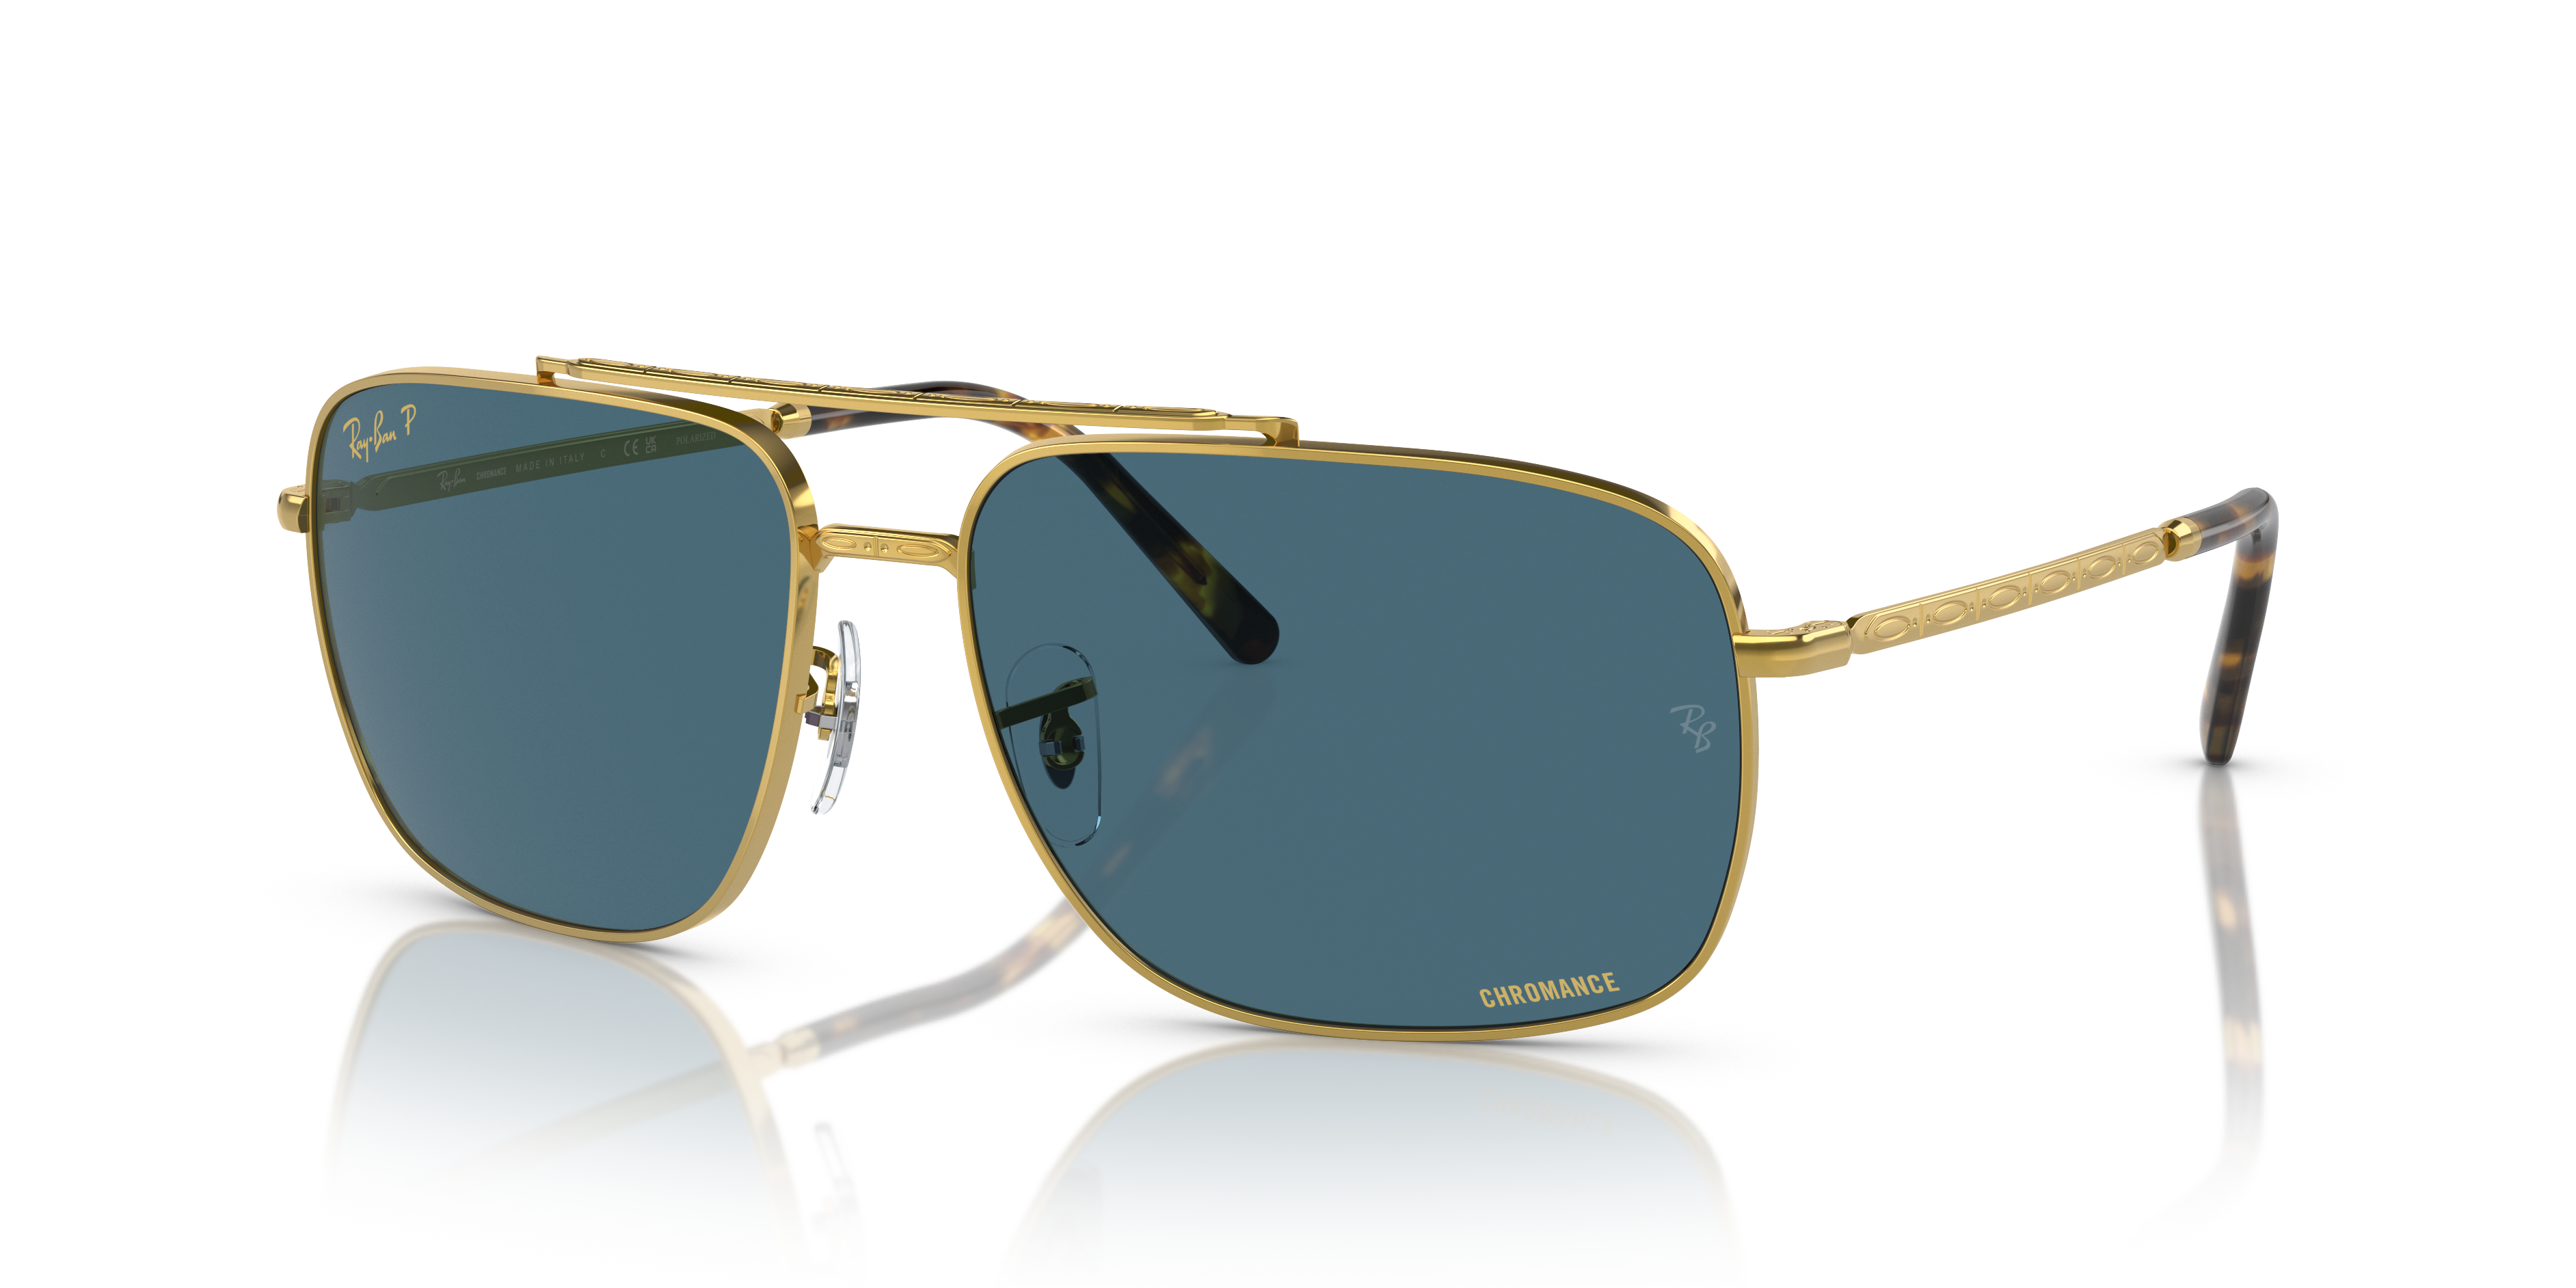 Sunglass Hut Perth | Sunglasses for Men, Women & Kids